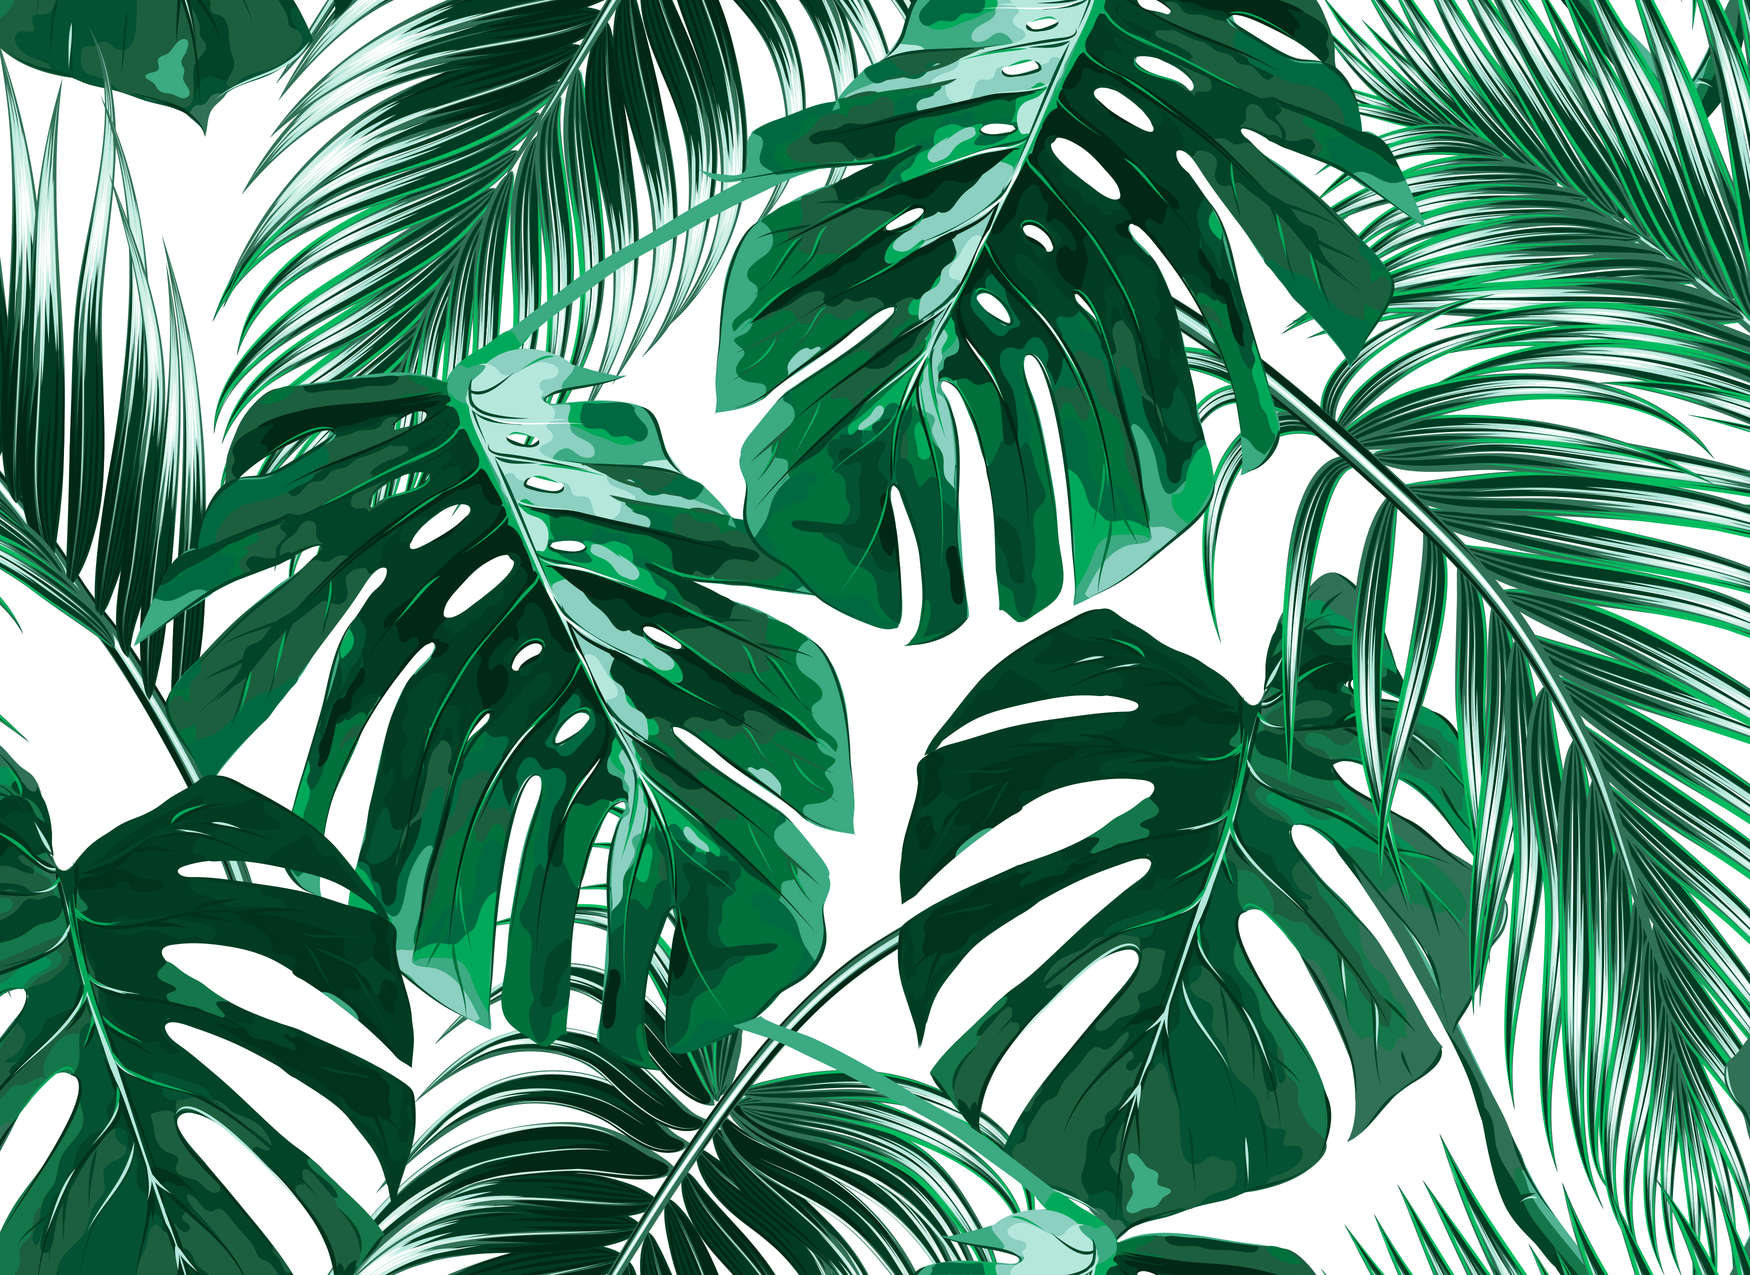             Palm Leaves Art Style Wallpaper - Green, White
        